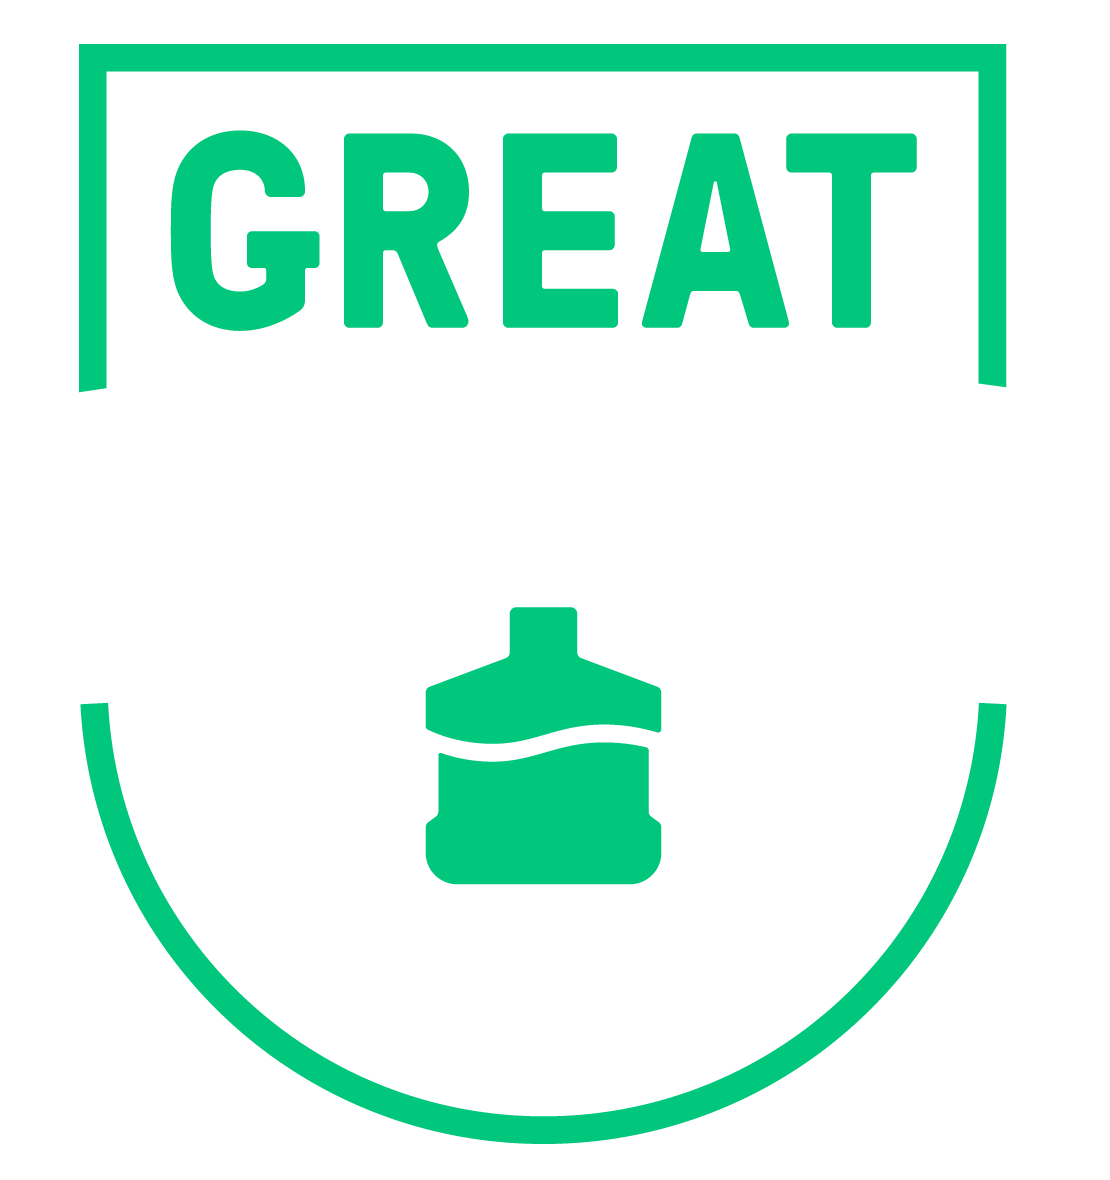 Great-Springs-badge-green-white-1